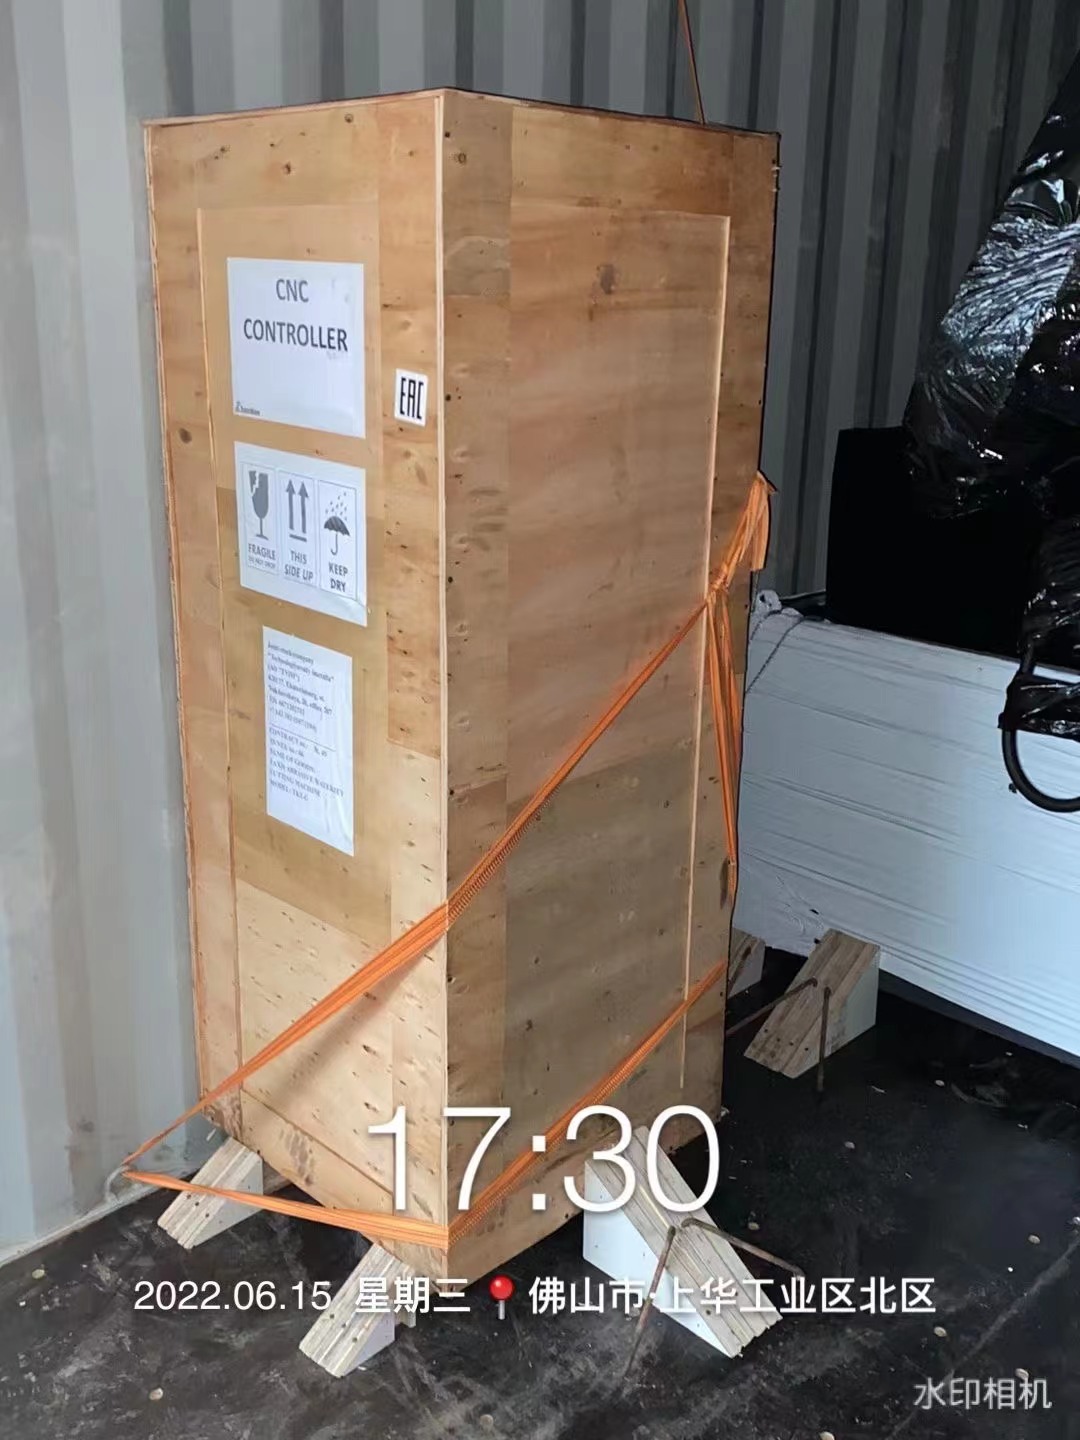 Machine(waterjet) shipping